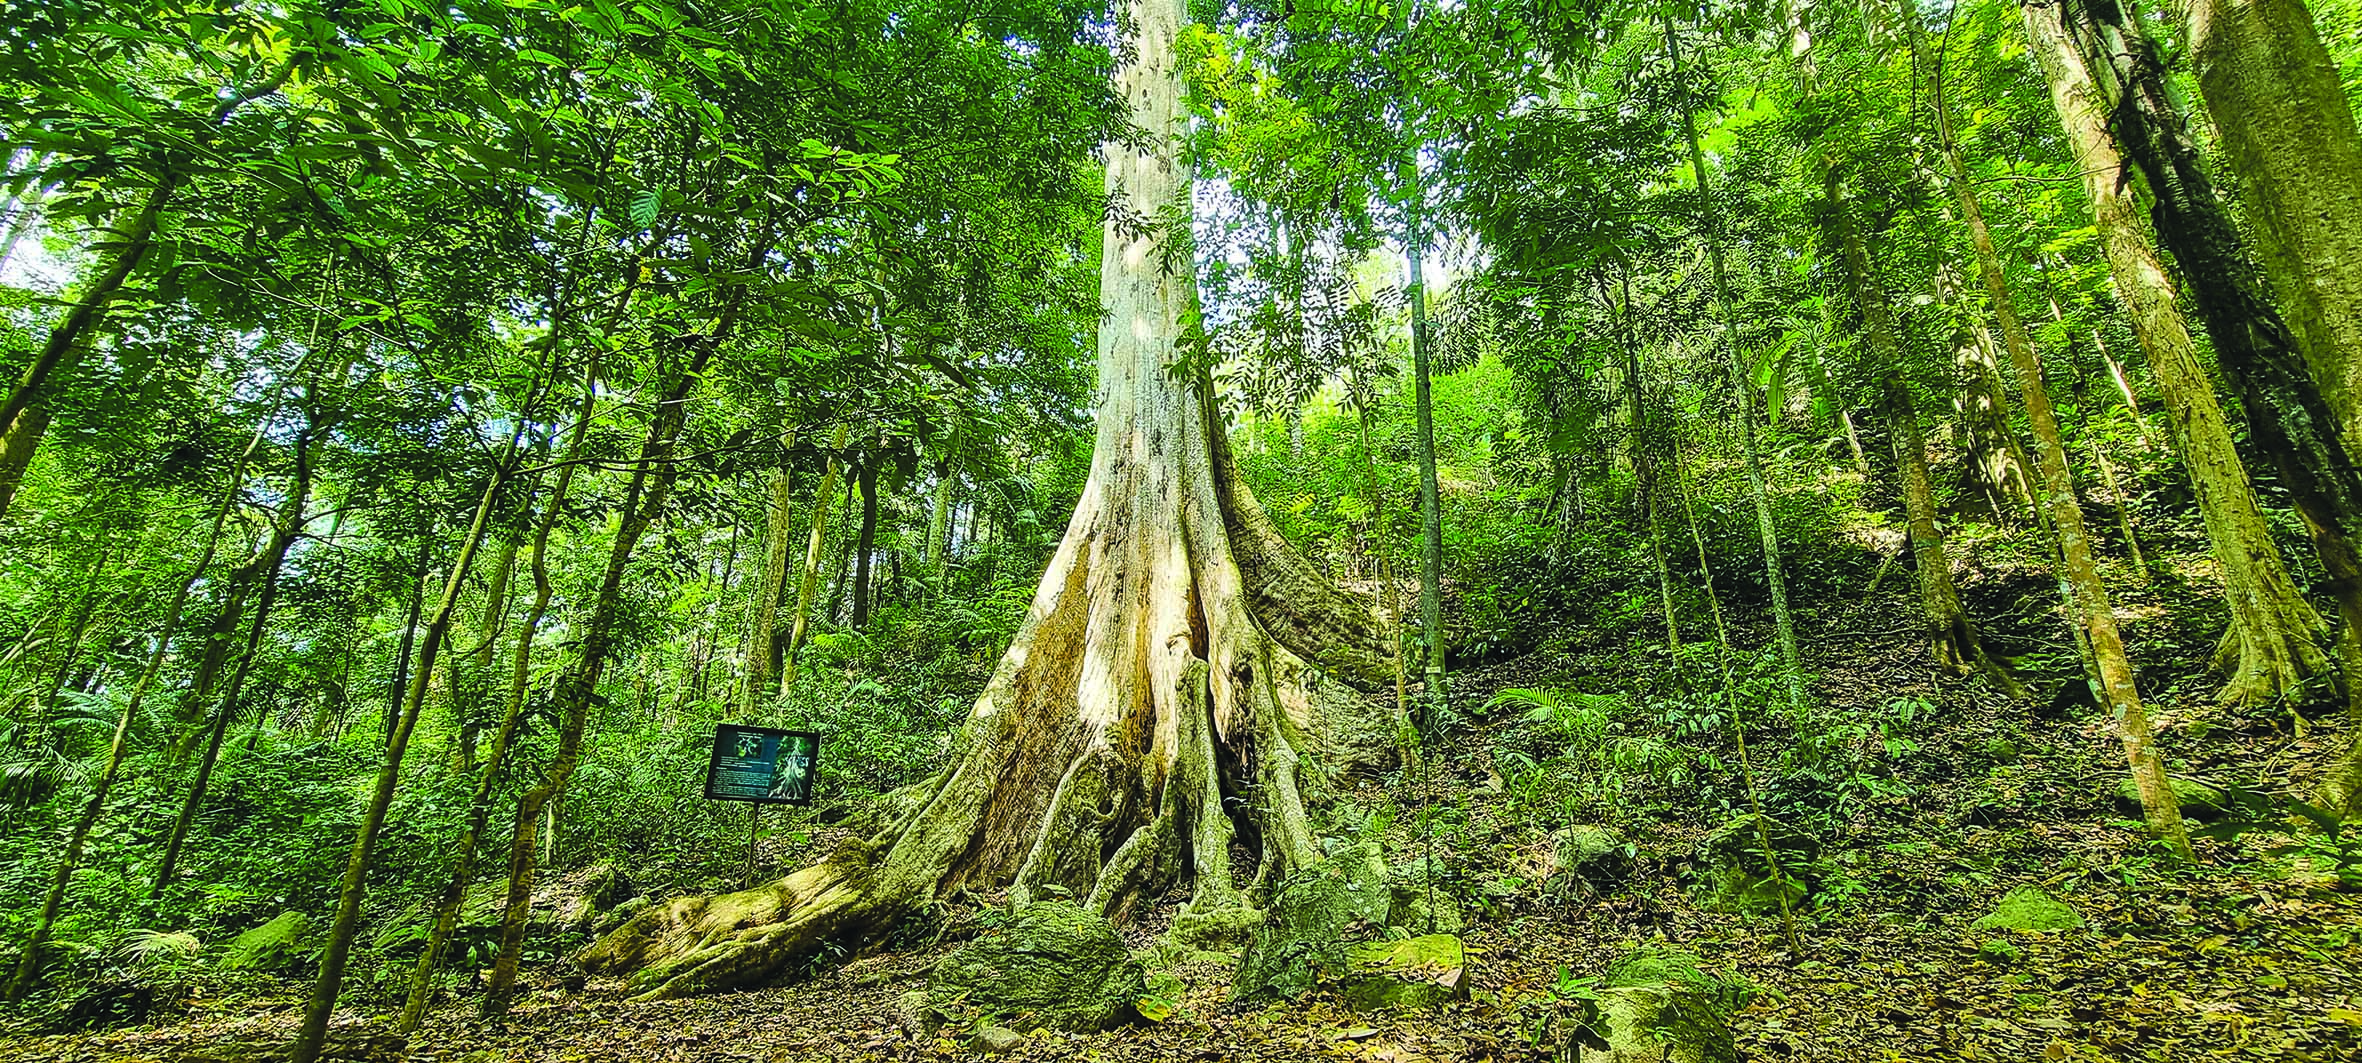 300-year-oldDao tree inside the Malasag eco-park.